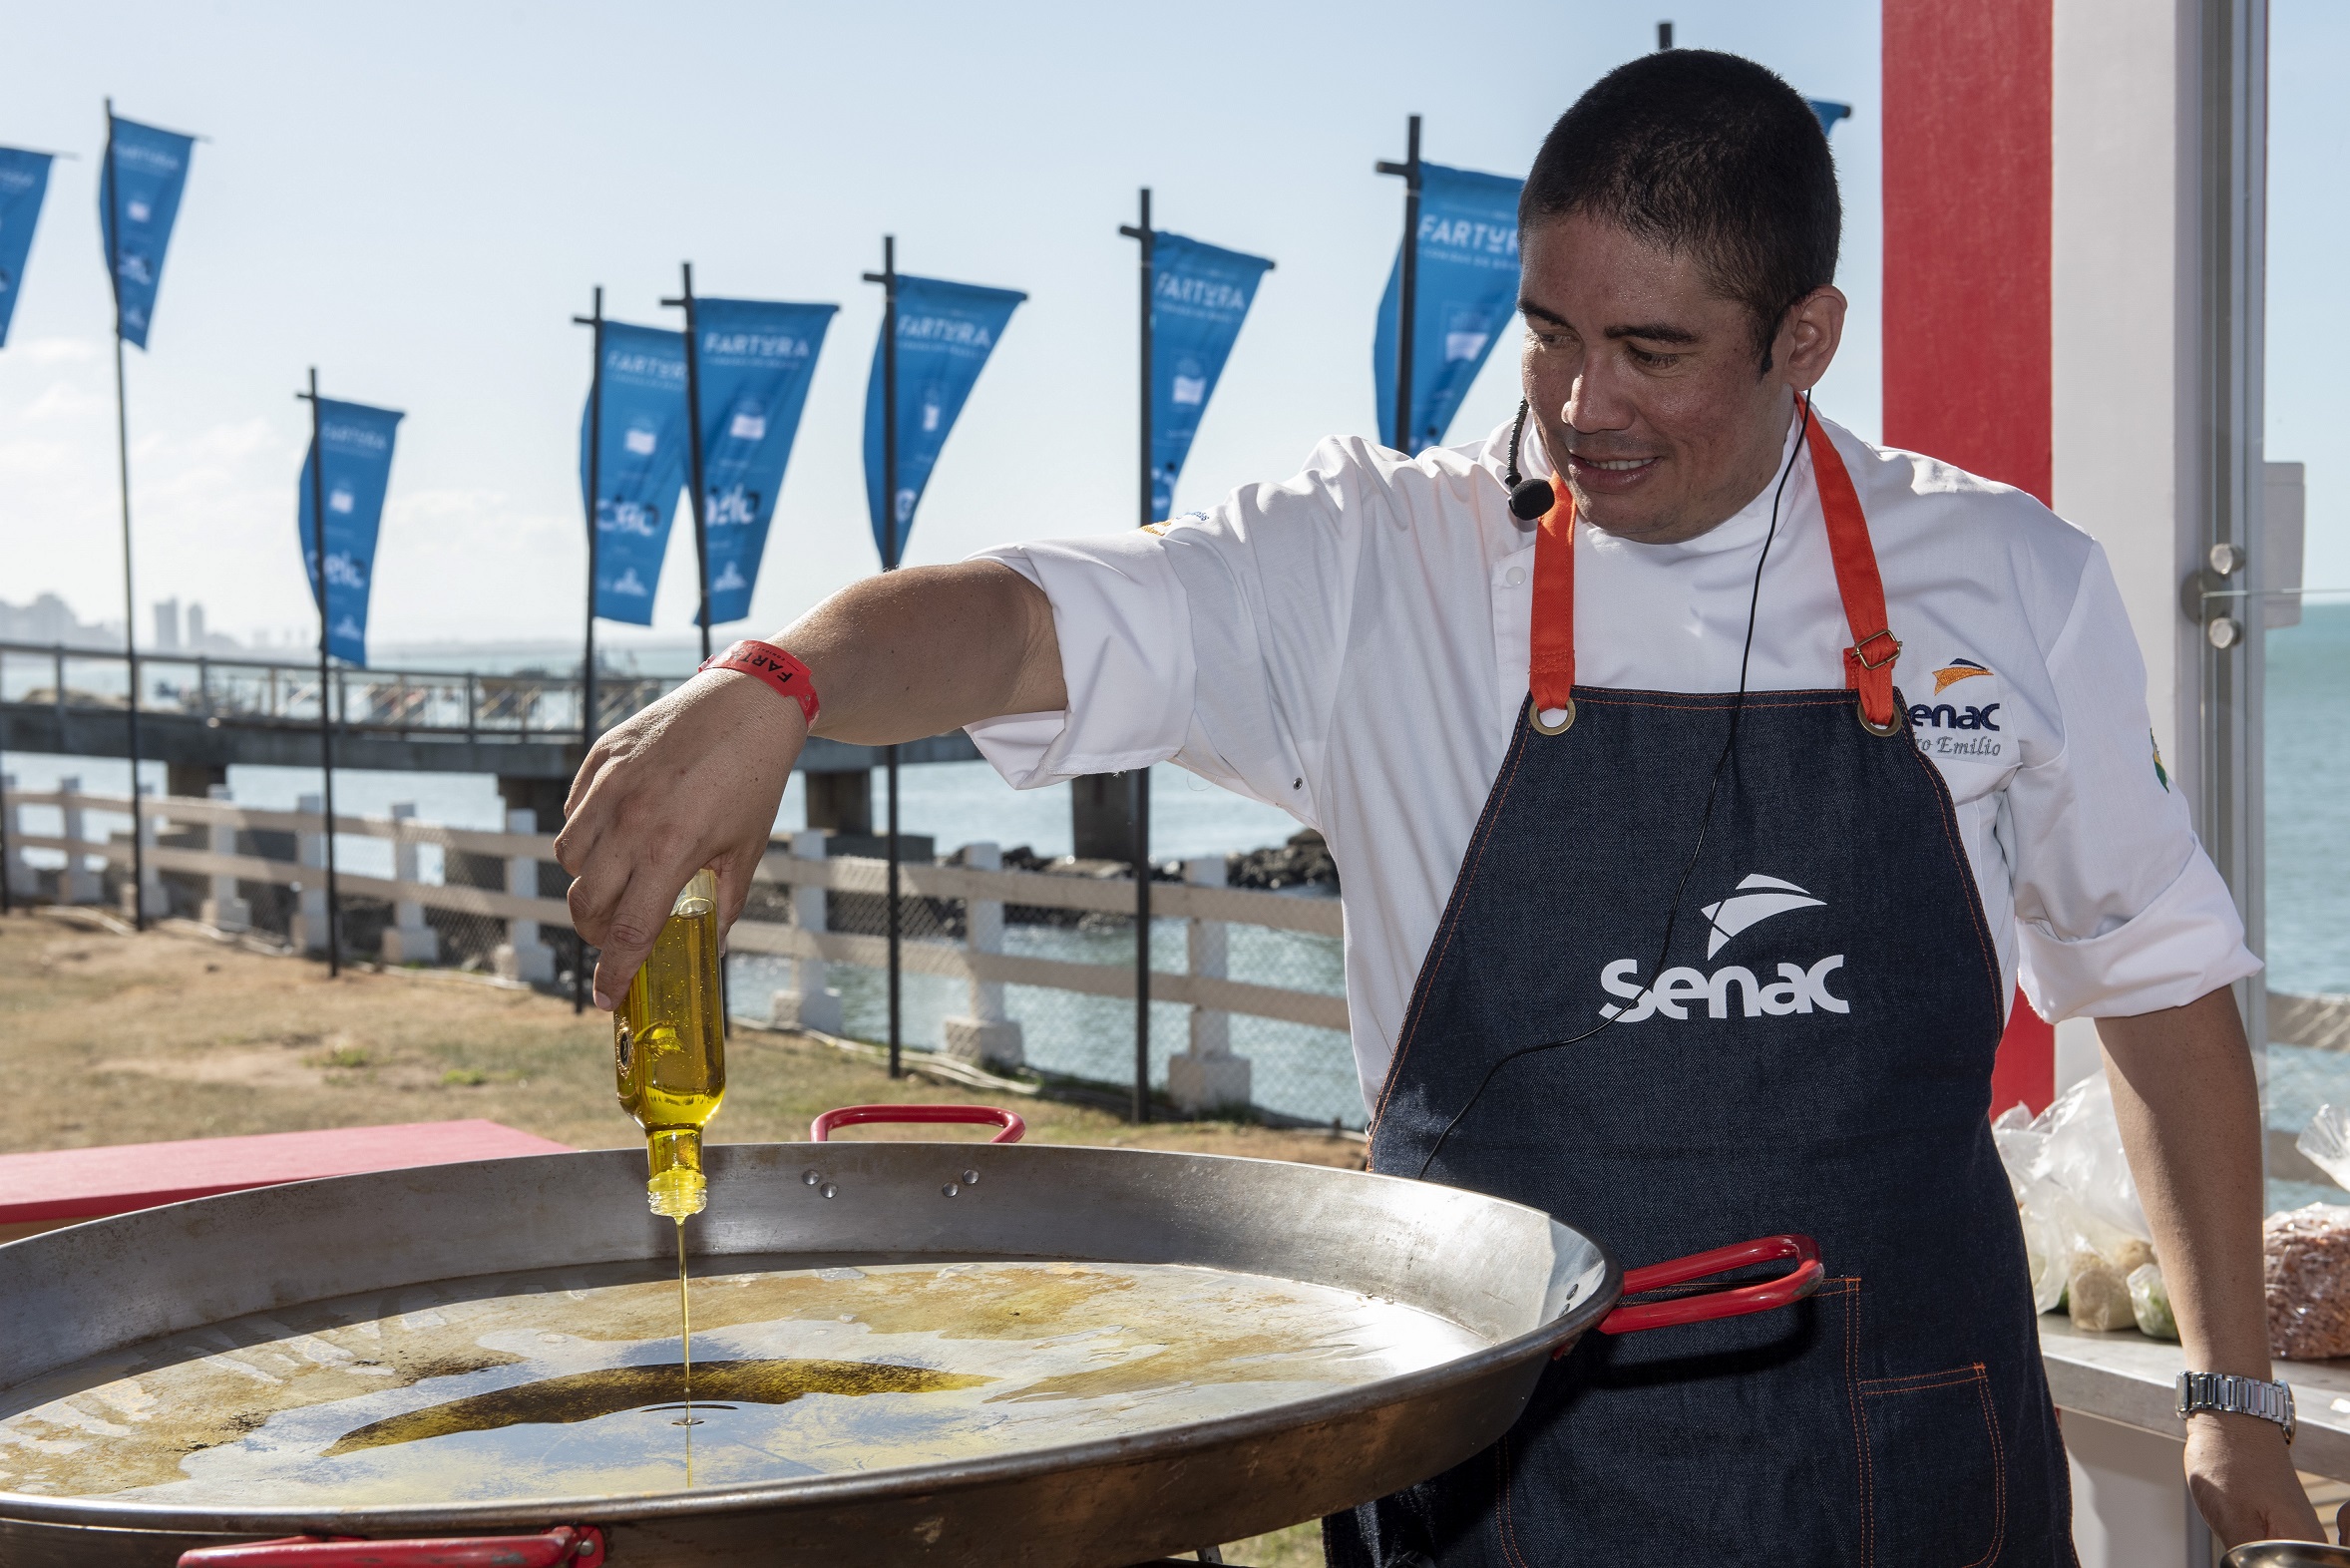 Senac-CE promove aulas gratuitas de gastronomia no Festival Fartura Fortaleza